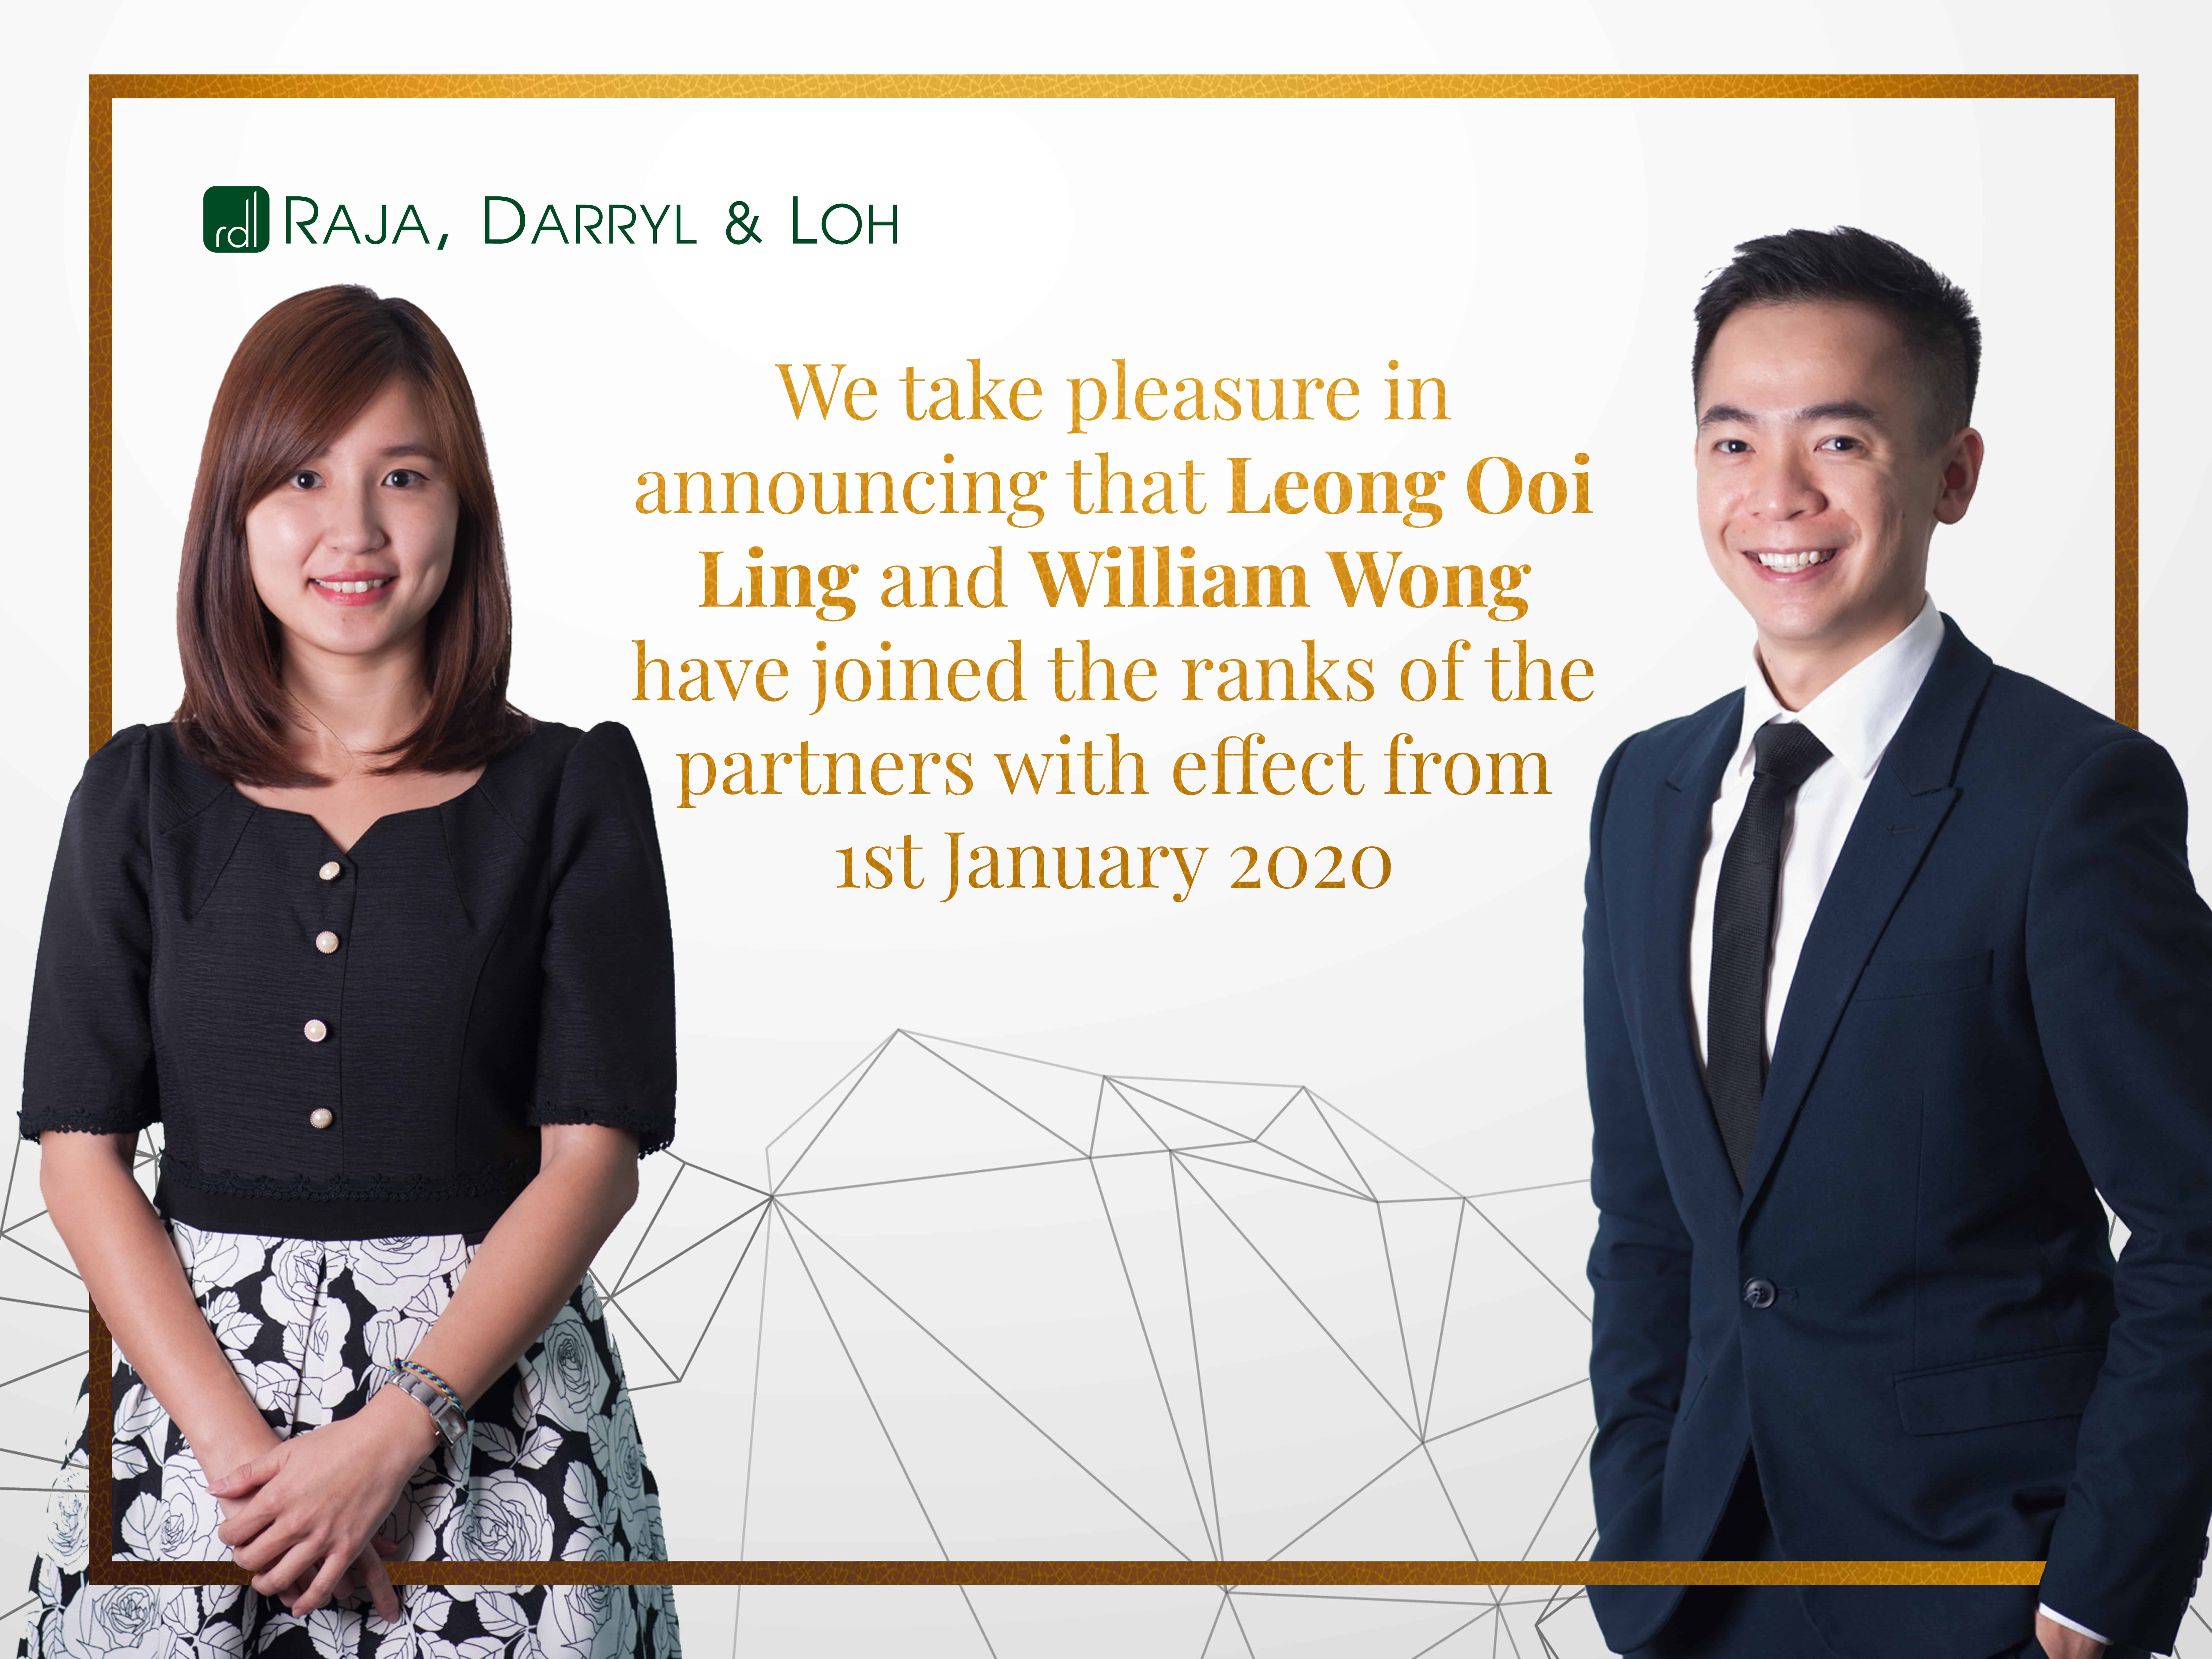 Announcing Raja Darryl Loh's New Partners - Leong Ooi Ling & William Wong